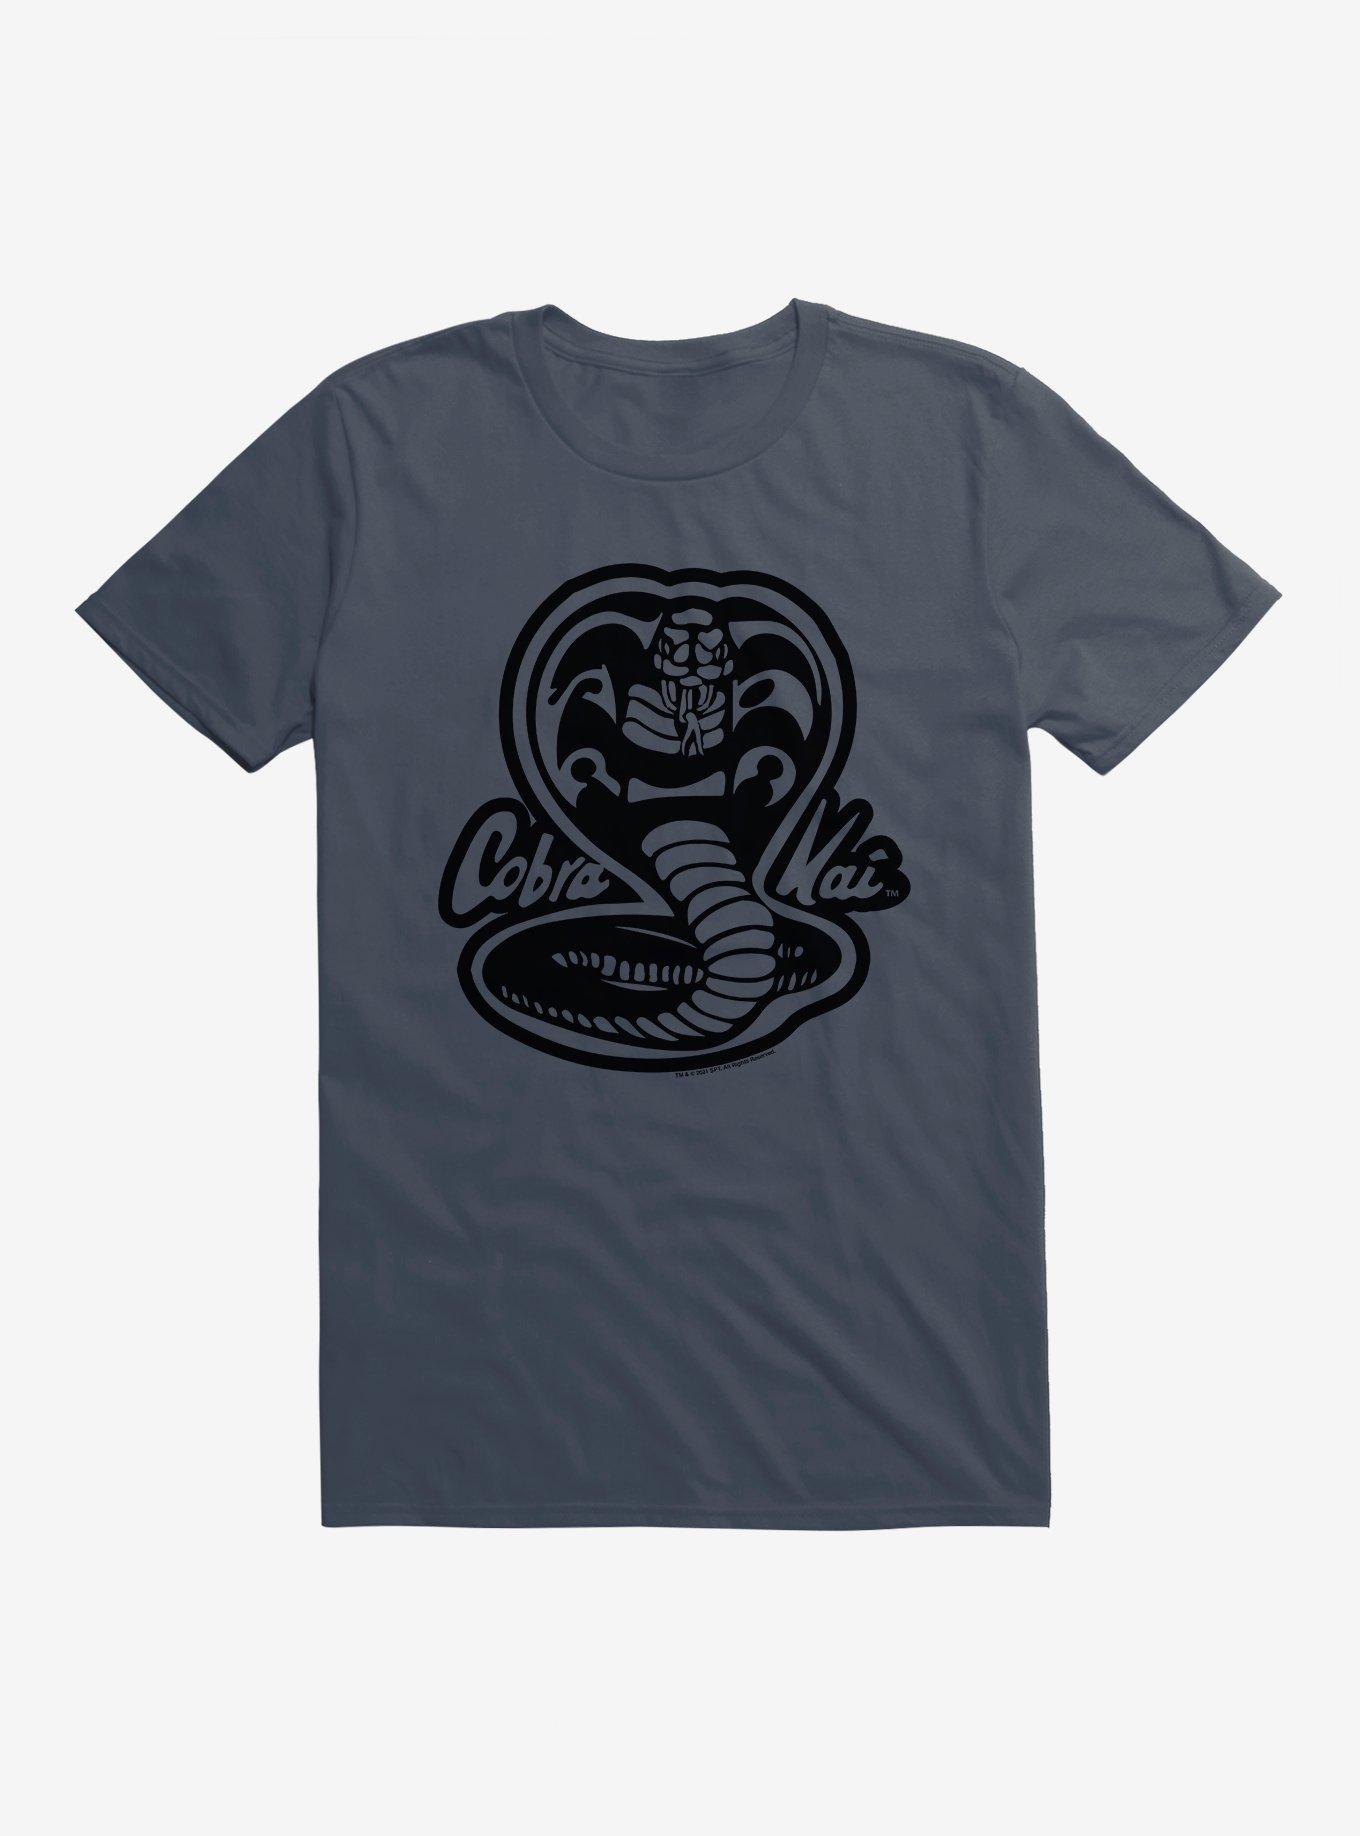 Cobra Kai Black And White Logo T-Shirt, LAKE, hi-res